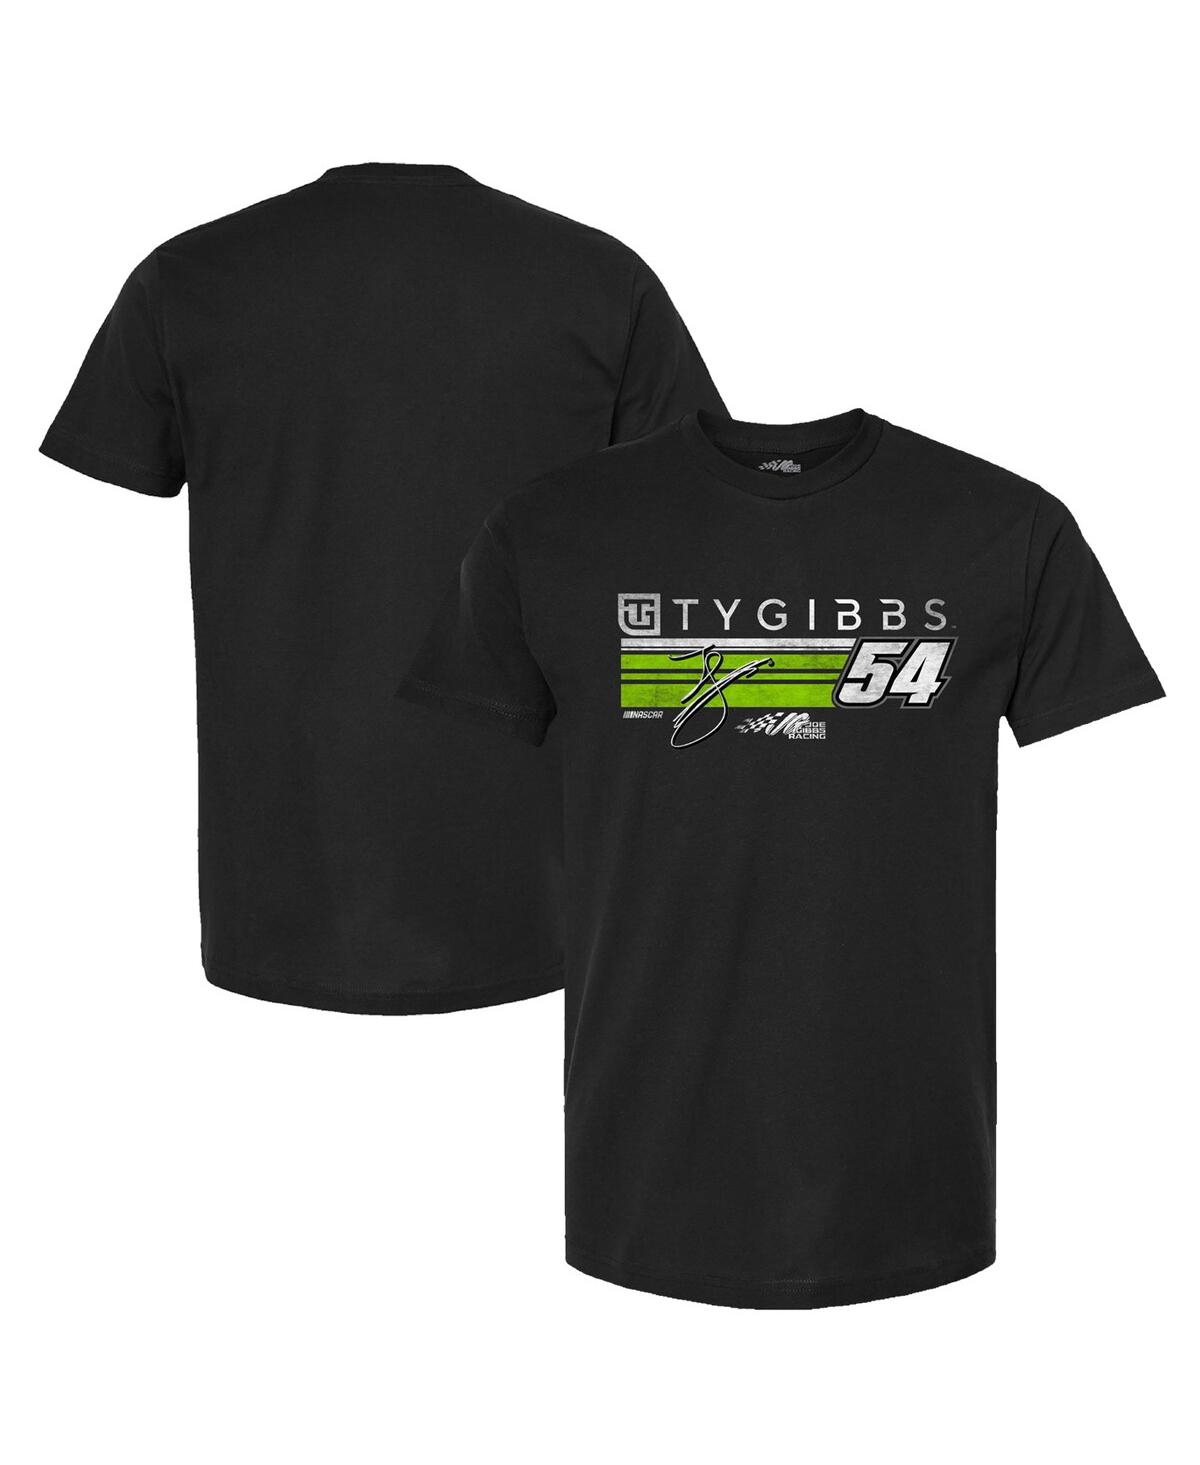 Men's Richard Childress Racing Team Collection Black Ty Gibbs Hot Lap T-shirt - Black